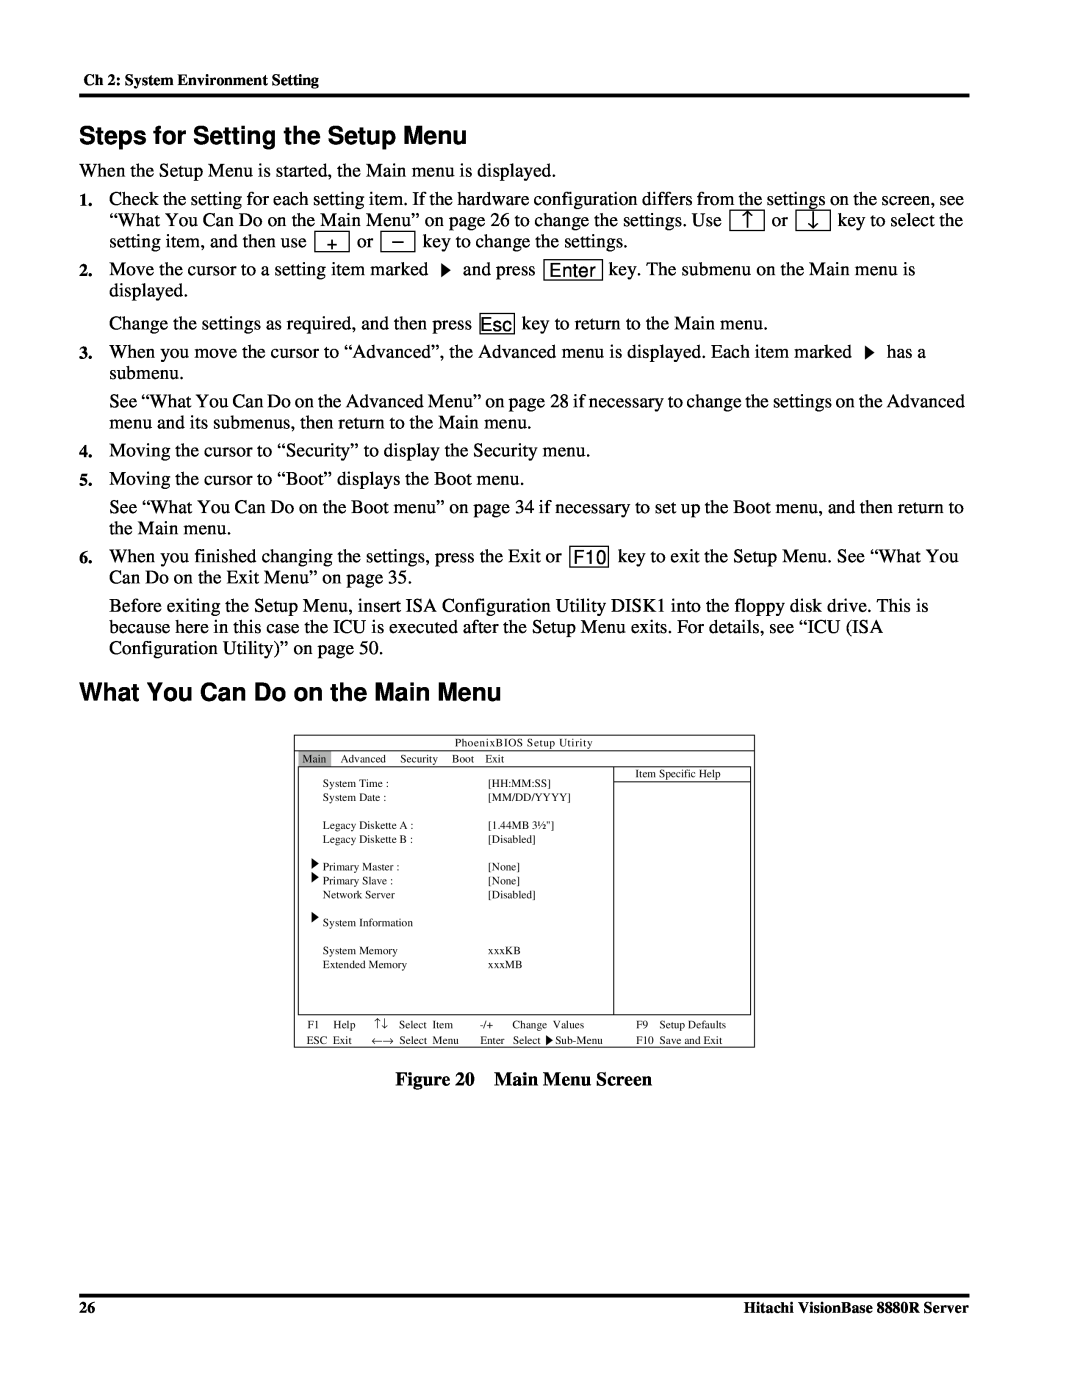 Hitachi 8880R manual Steps for Setting the Setup Menu, What You Can Do on the Main Menu, Main Menu Screen 